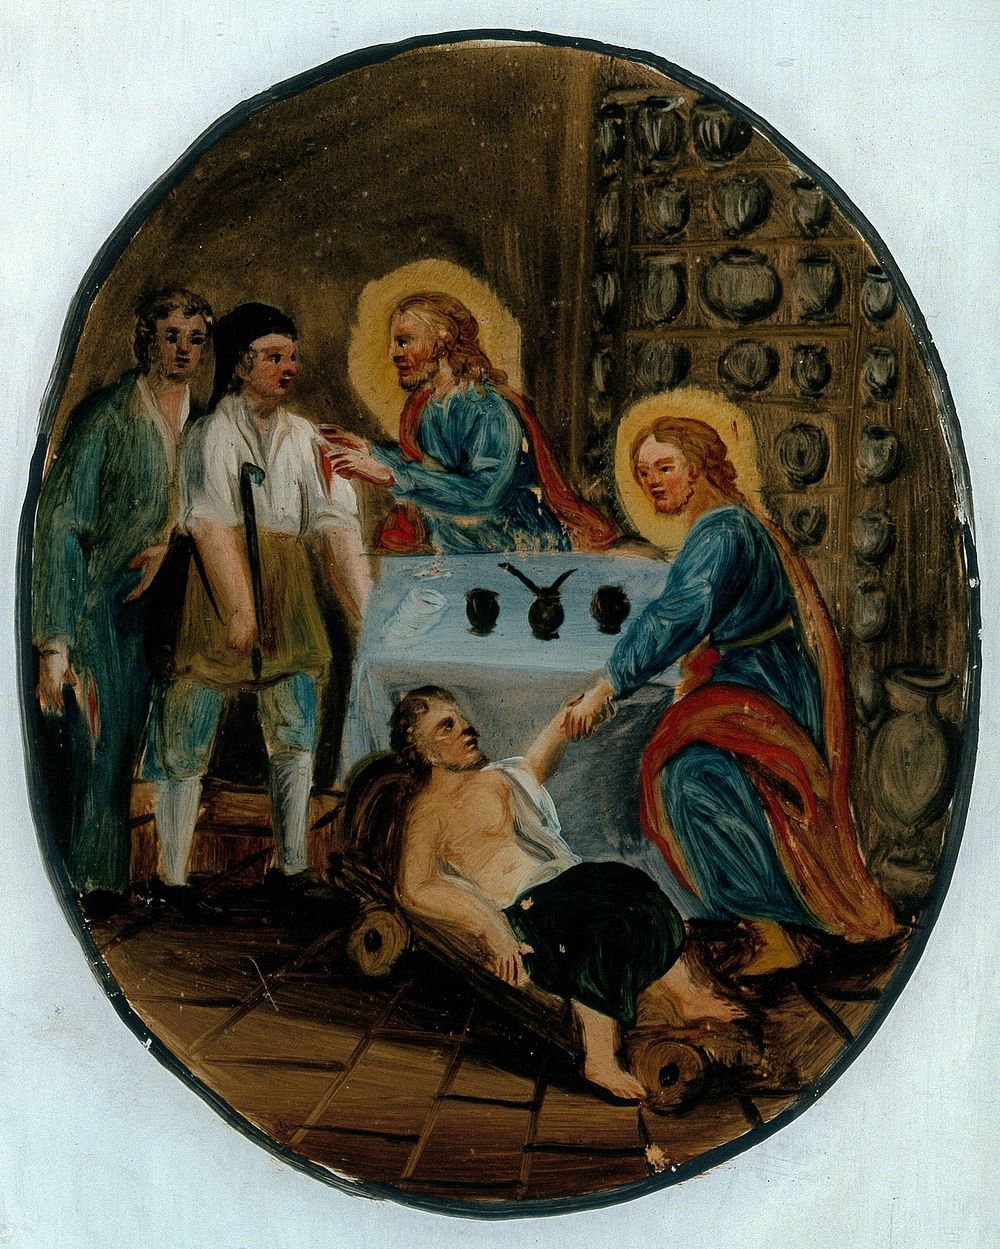 Saint Cosmas and Saint Damian treating the sick. Gouache painting.